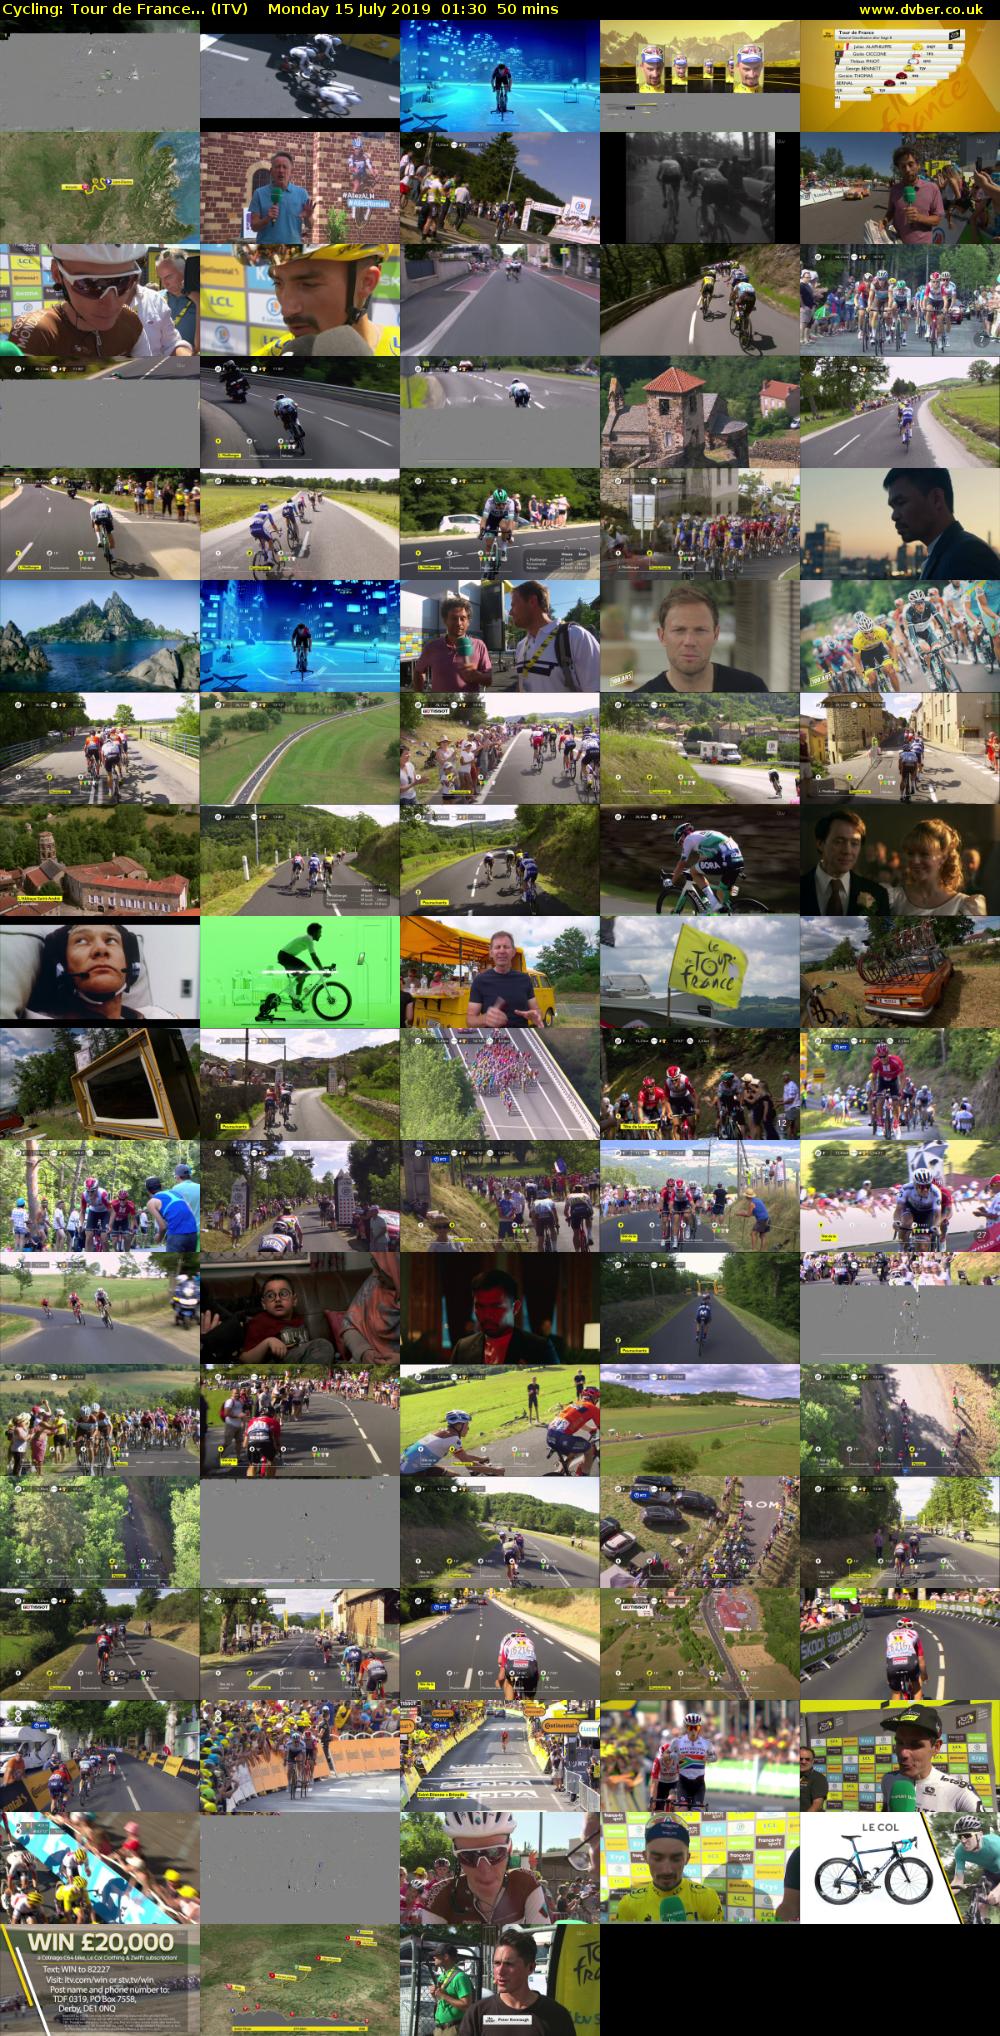 Cycling: Tour de France... (ITV) Monday 15 July 2019 01:30 - 02:20